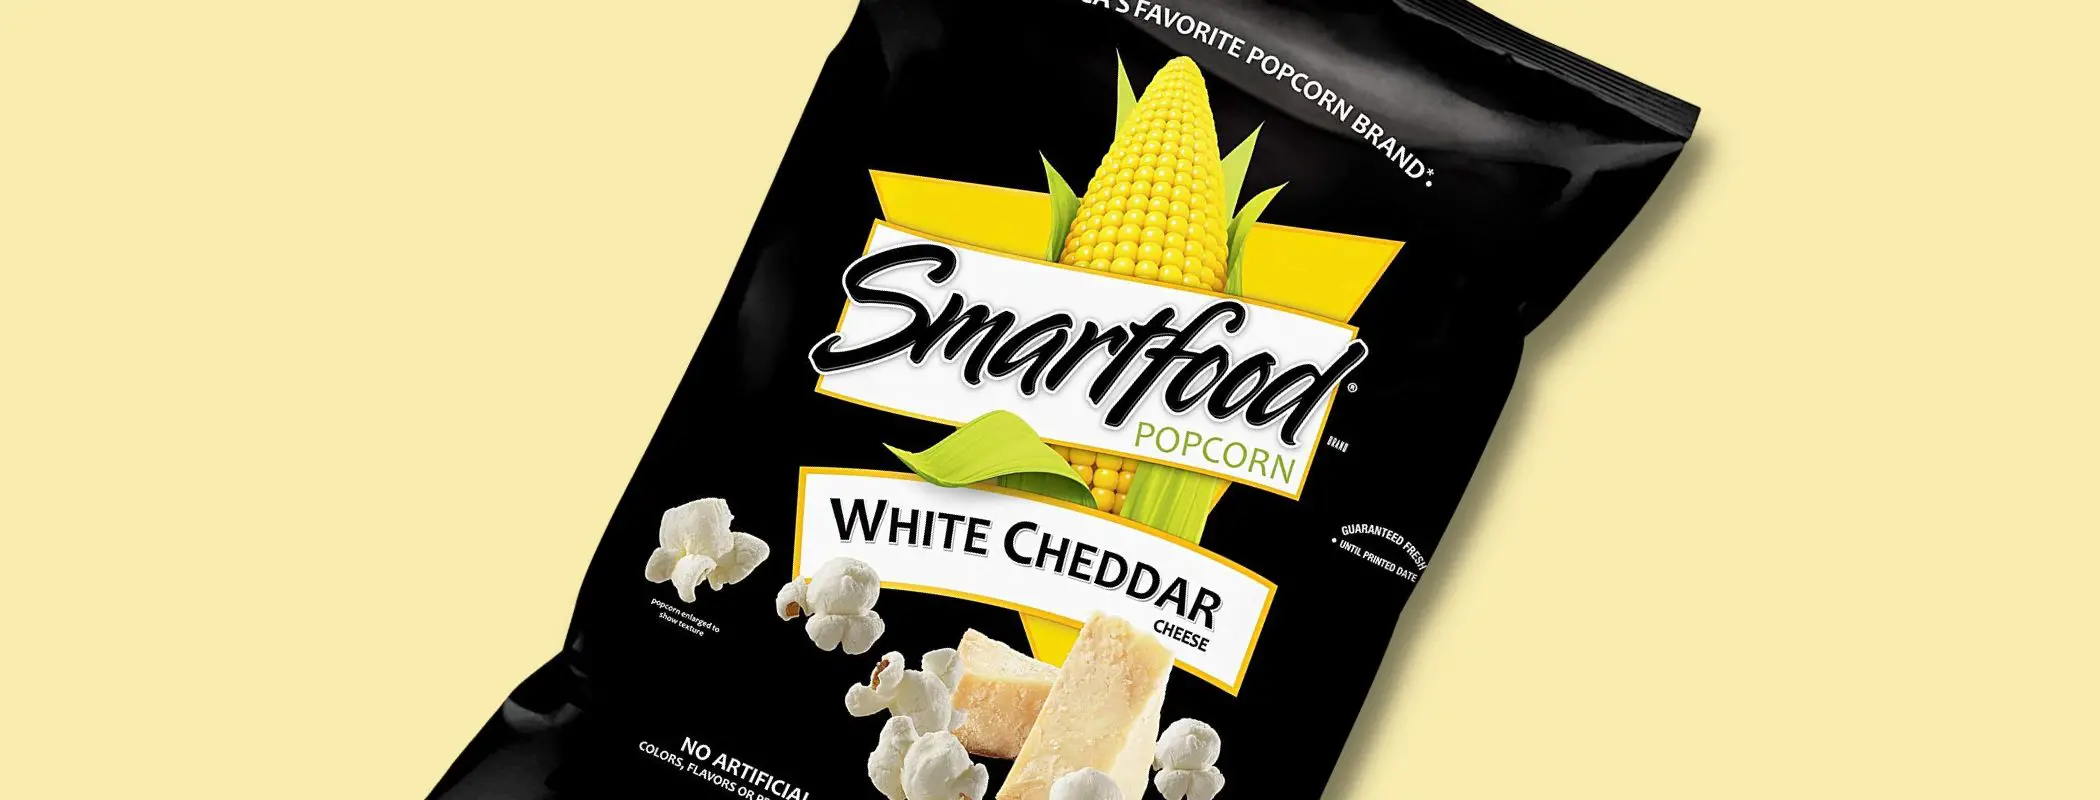 Is White Cheddar Popcorn Healthy